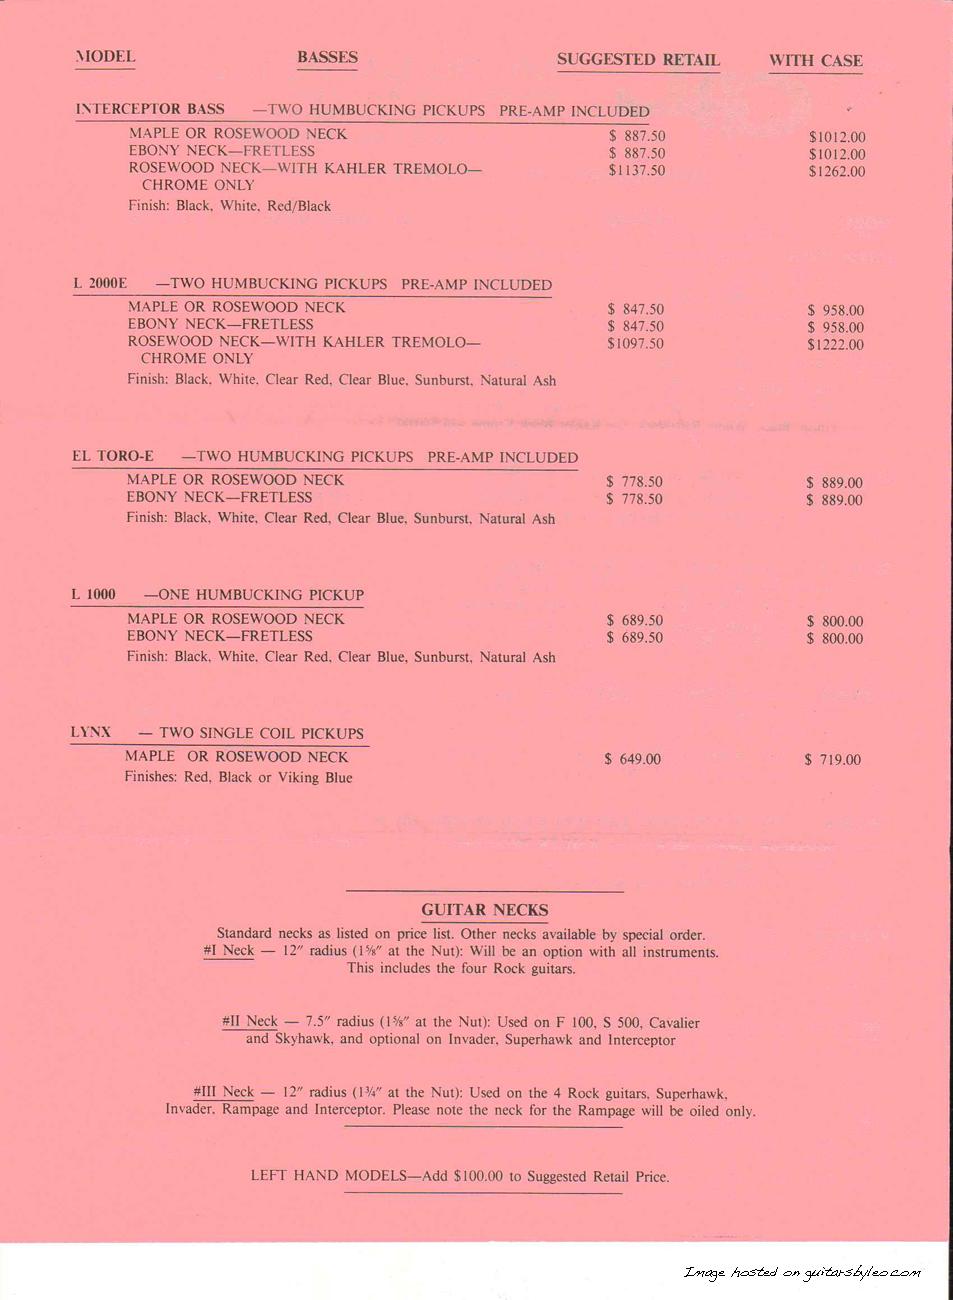 1-15-85 G&L Price List page 2